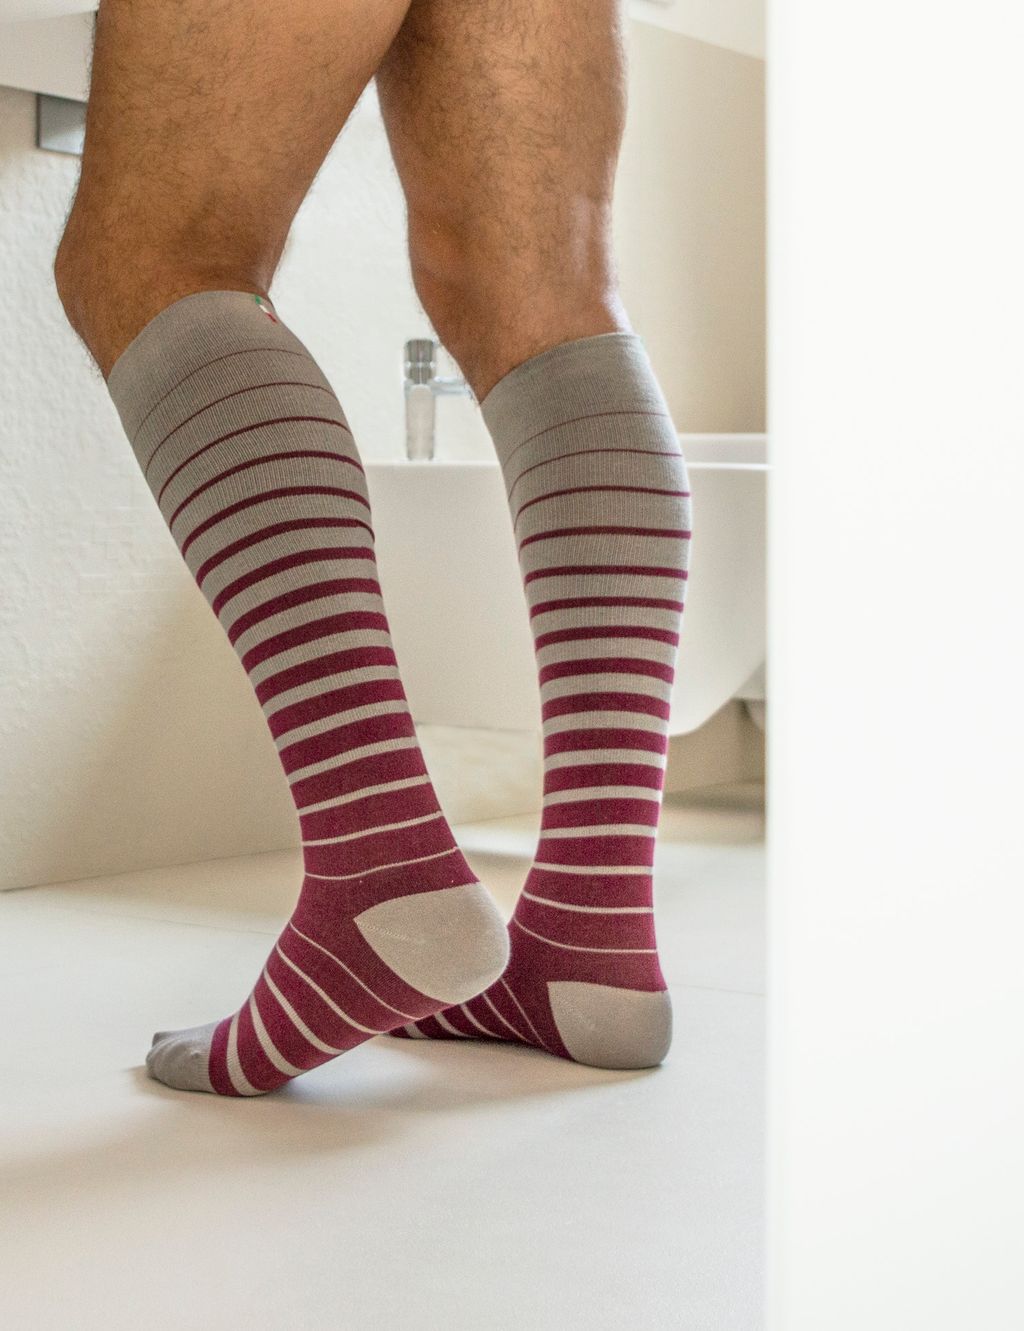 Relaxsan Fancy Cotton Socks Гольфы с хлопком 1 класс компрессии унисекс, р. 3, арт. 820 Fancy (18-22 mm Hg), бордо-полоски, пара, 1 шт.